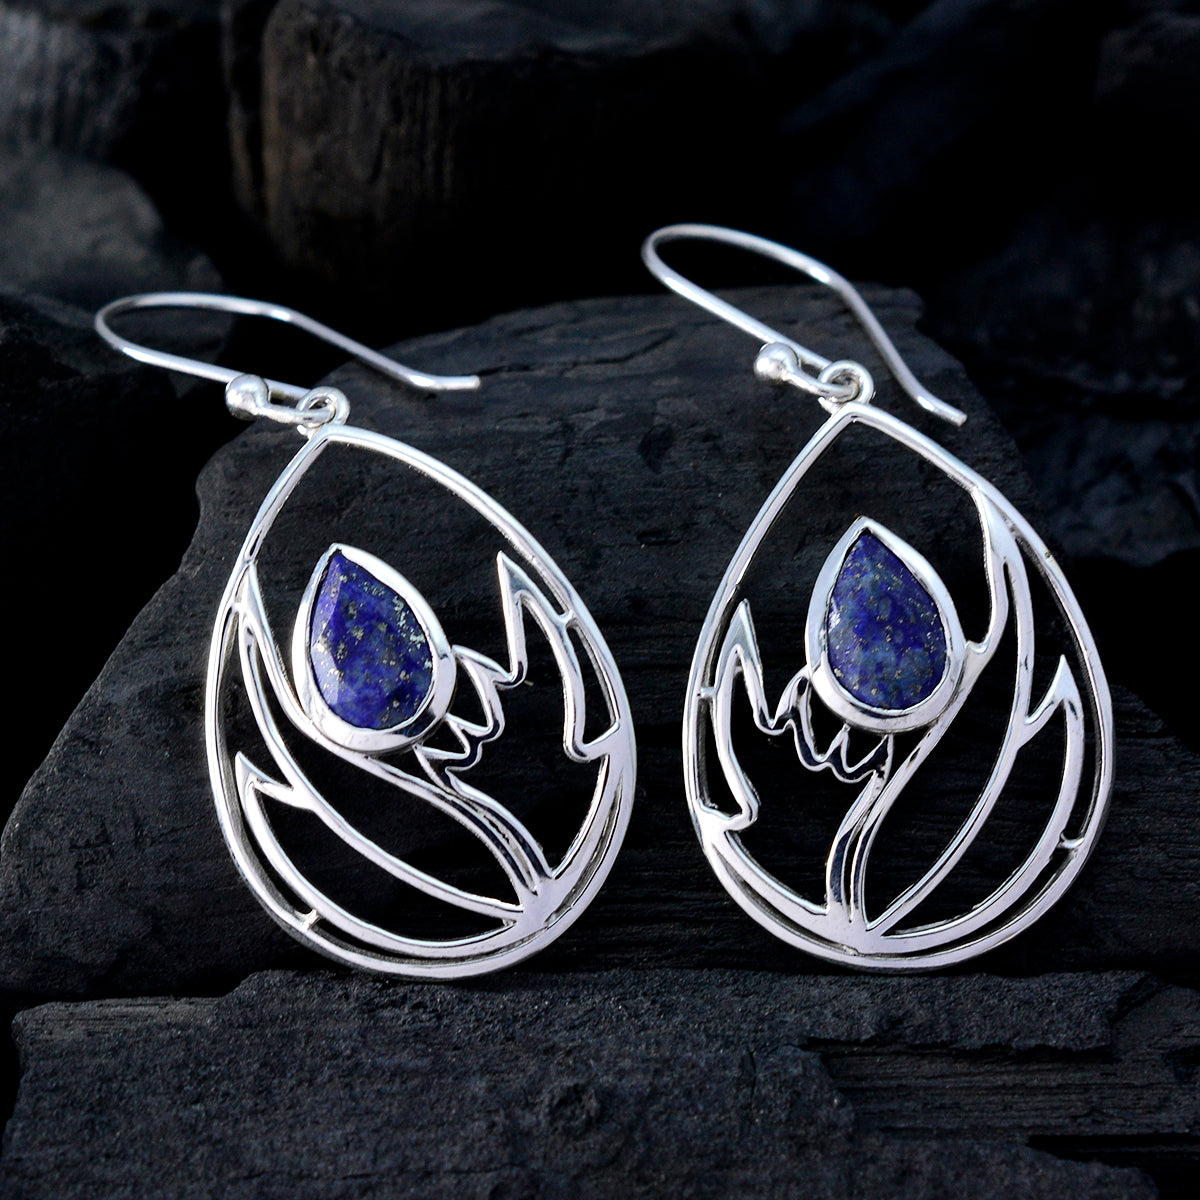 Riyo Good Gemstones Pear Faceted Nevy Blue Lapis Lazuli Silver Earrings gift for wedding